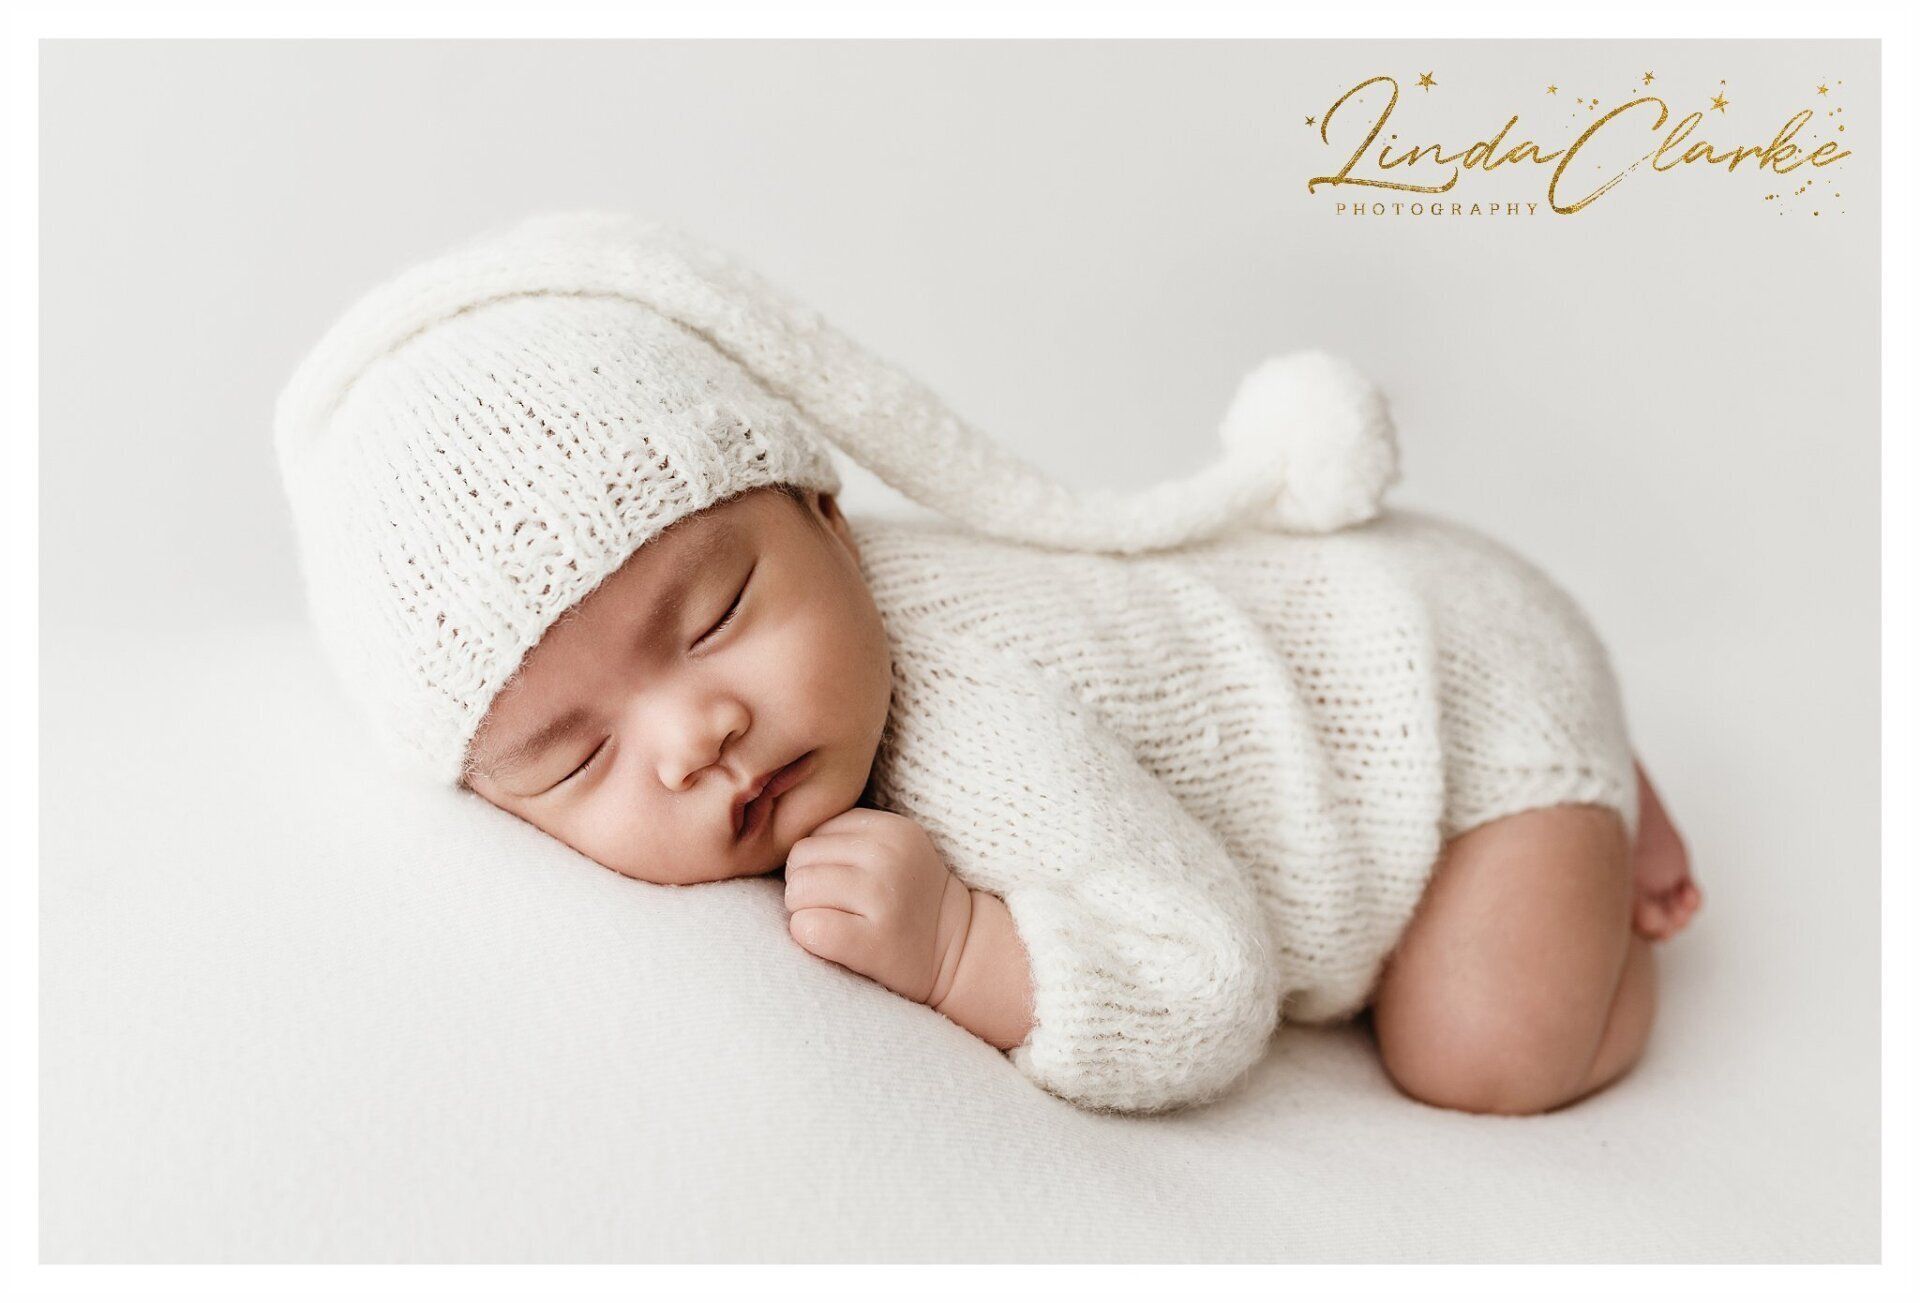 Newborn baby in cream outfit photographs Dublin